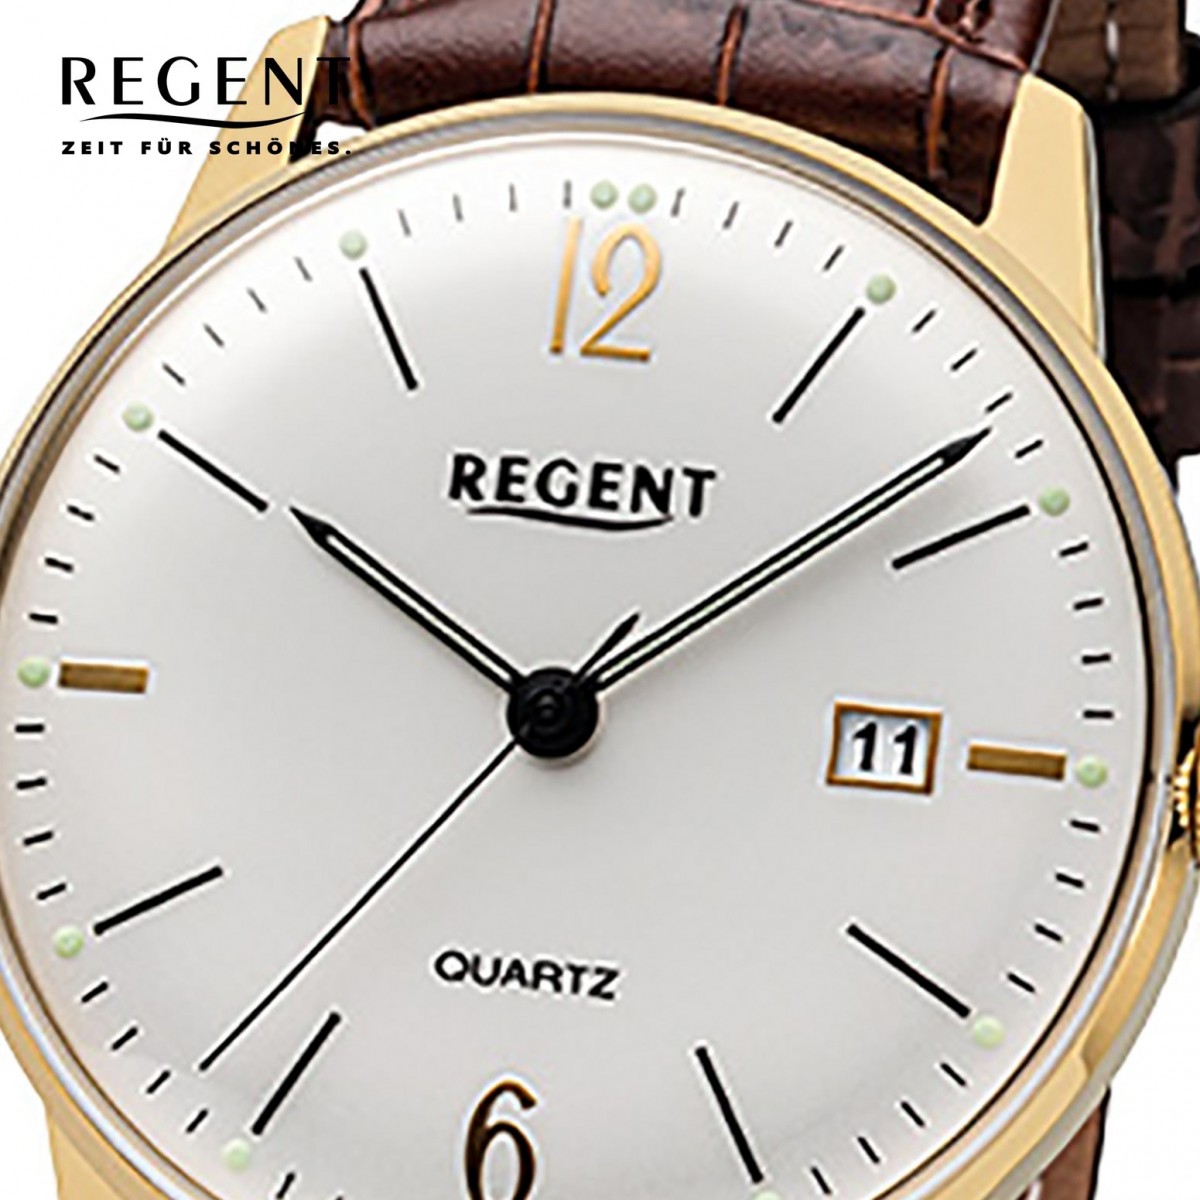 Regent URF987 Herren-Armbanduhr Retro F-987 Leder-Armband Quarz-Uhr braun